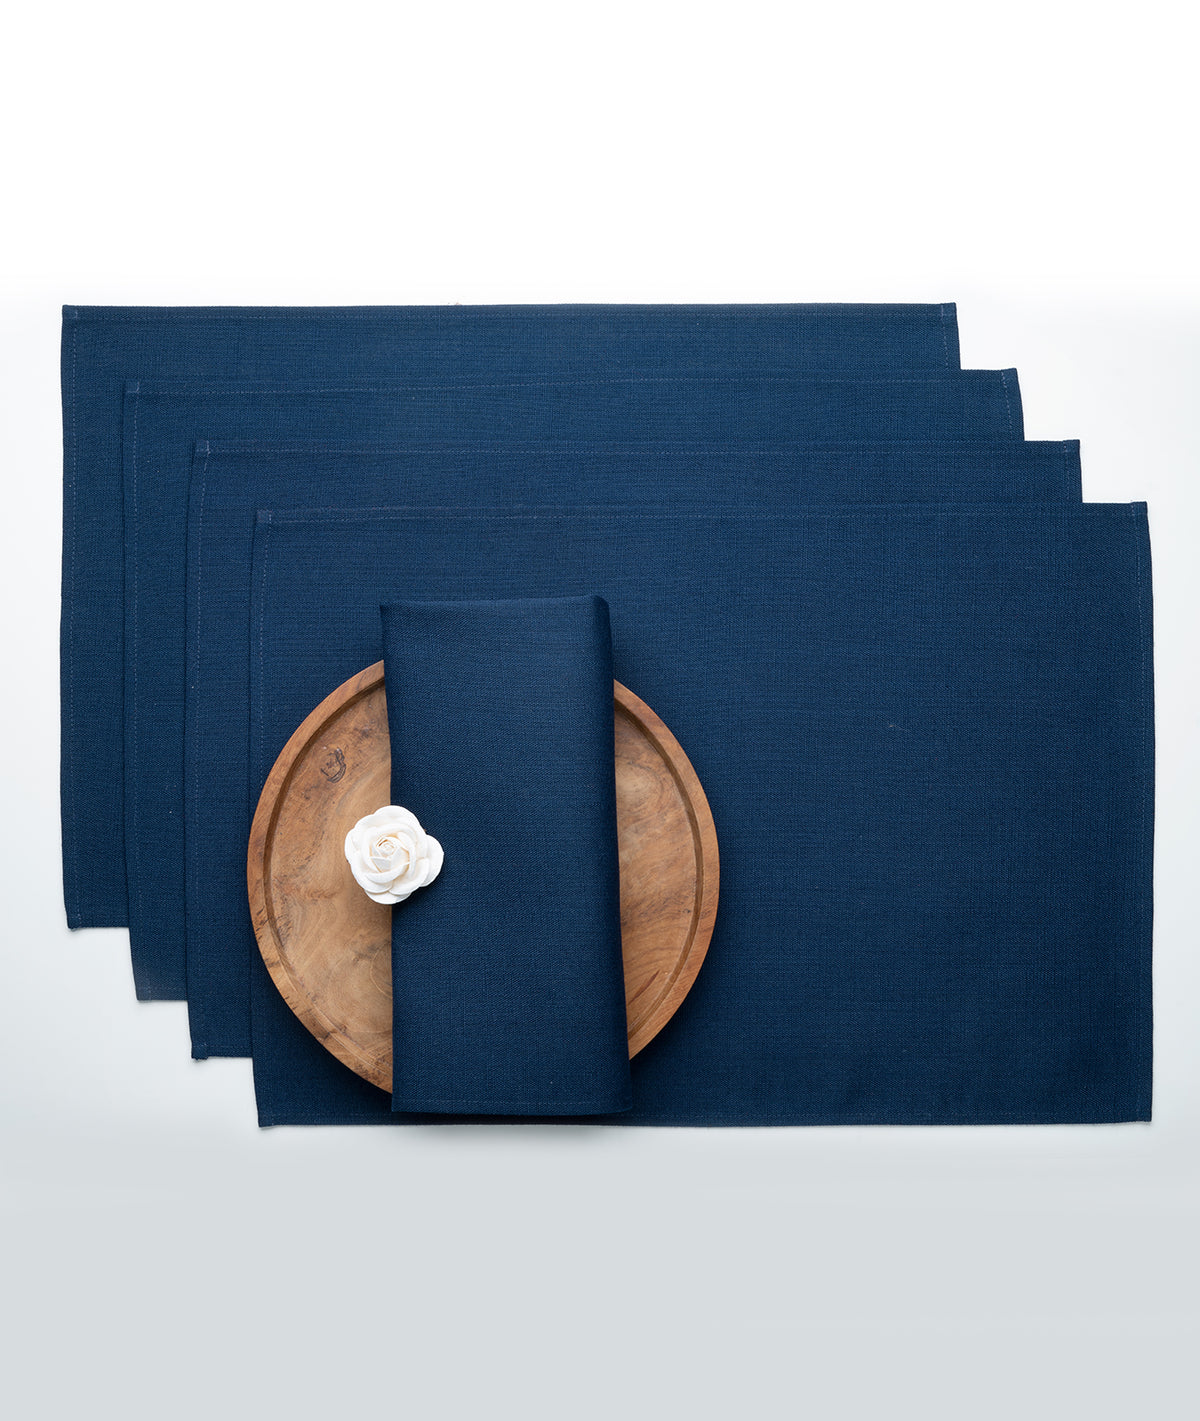 Navy Blue Linen Textured Placemats 13 x 18 Inch Set of 4 - Plain